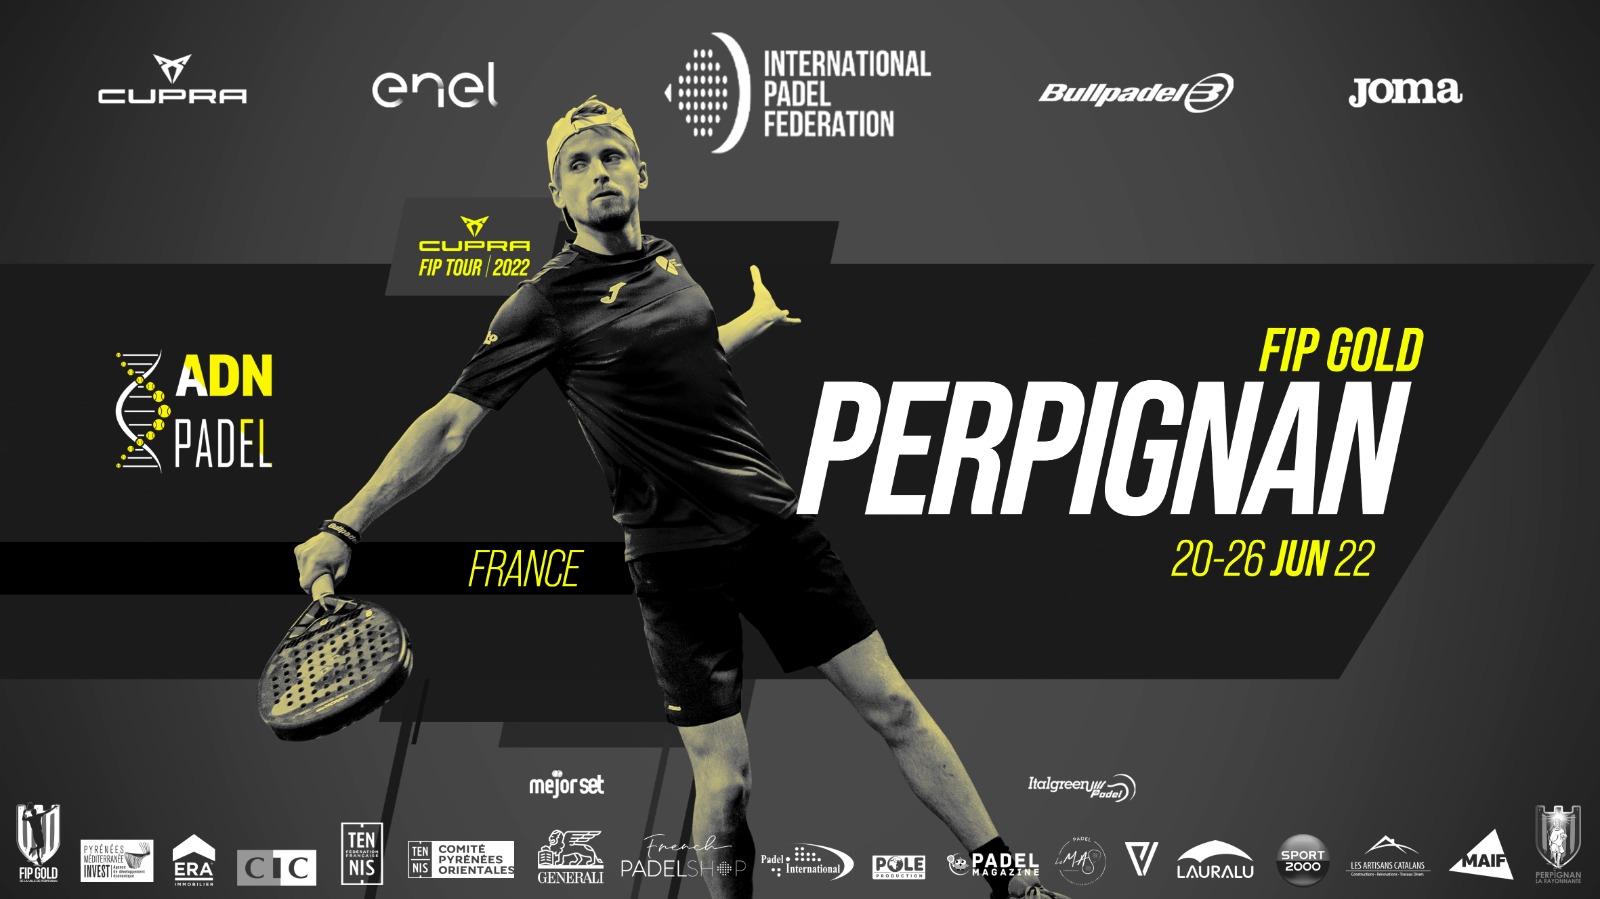 Perpignan: the FIP Gold program!